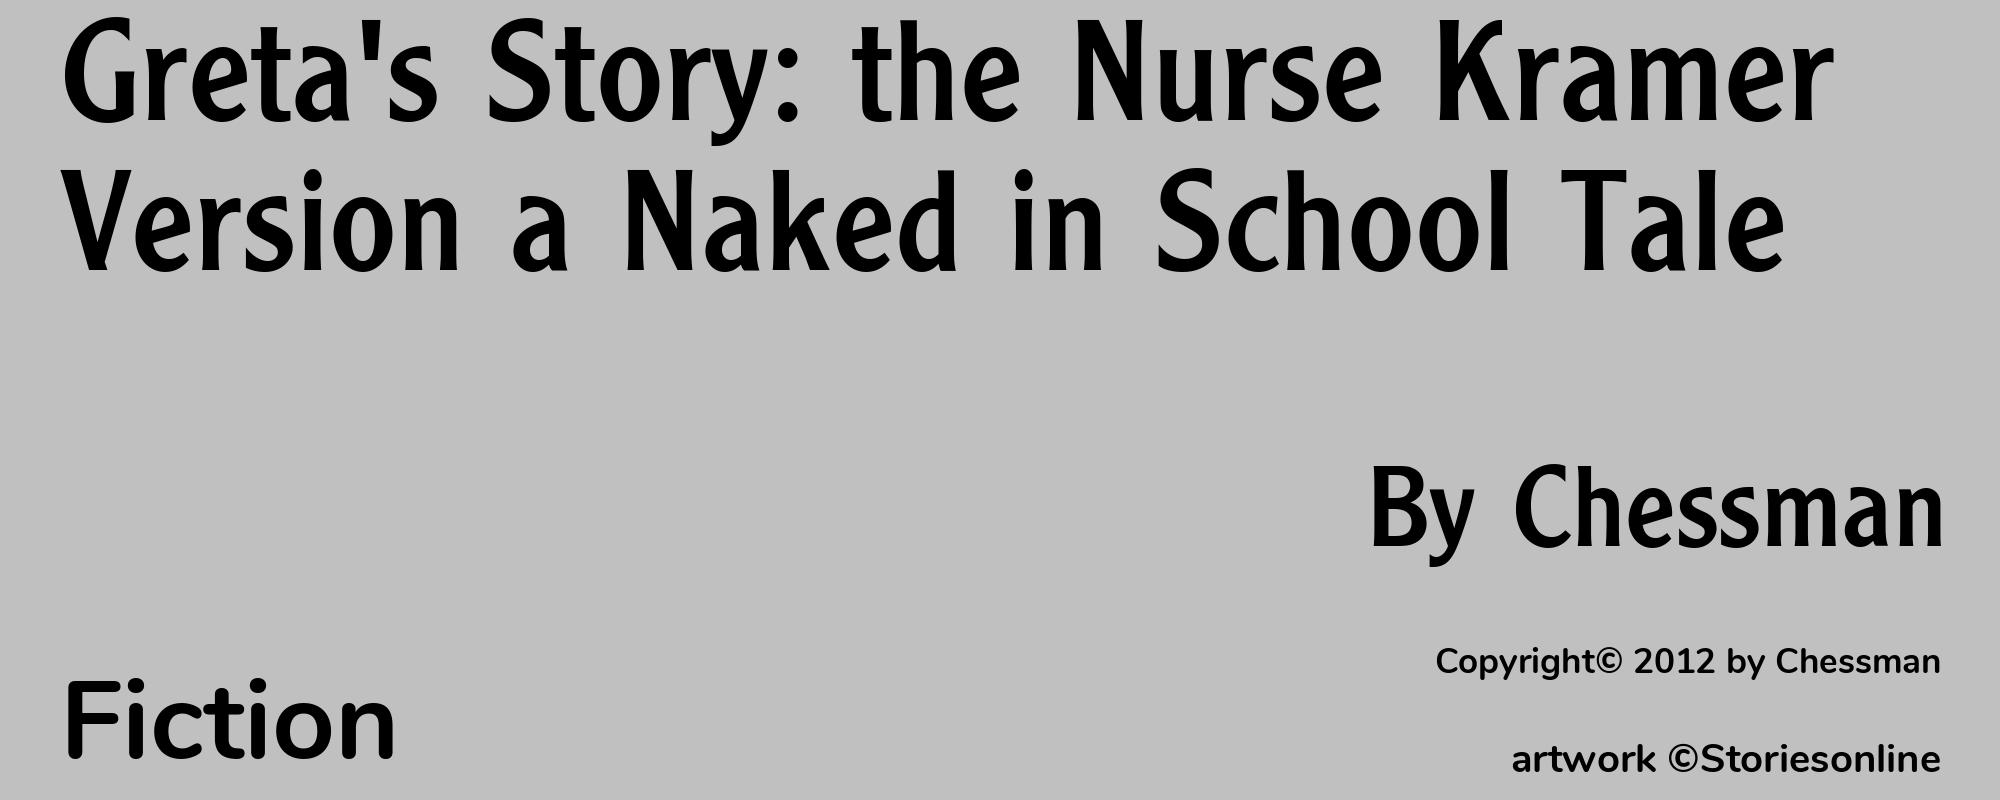 Greta's Story: the Nurse Kramer Version a Naked in School Tale - Cover